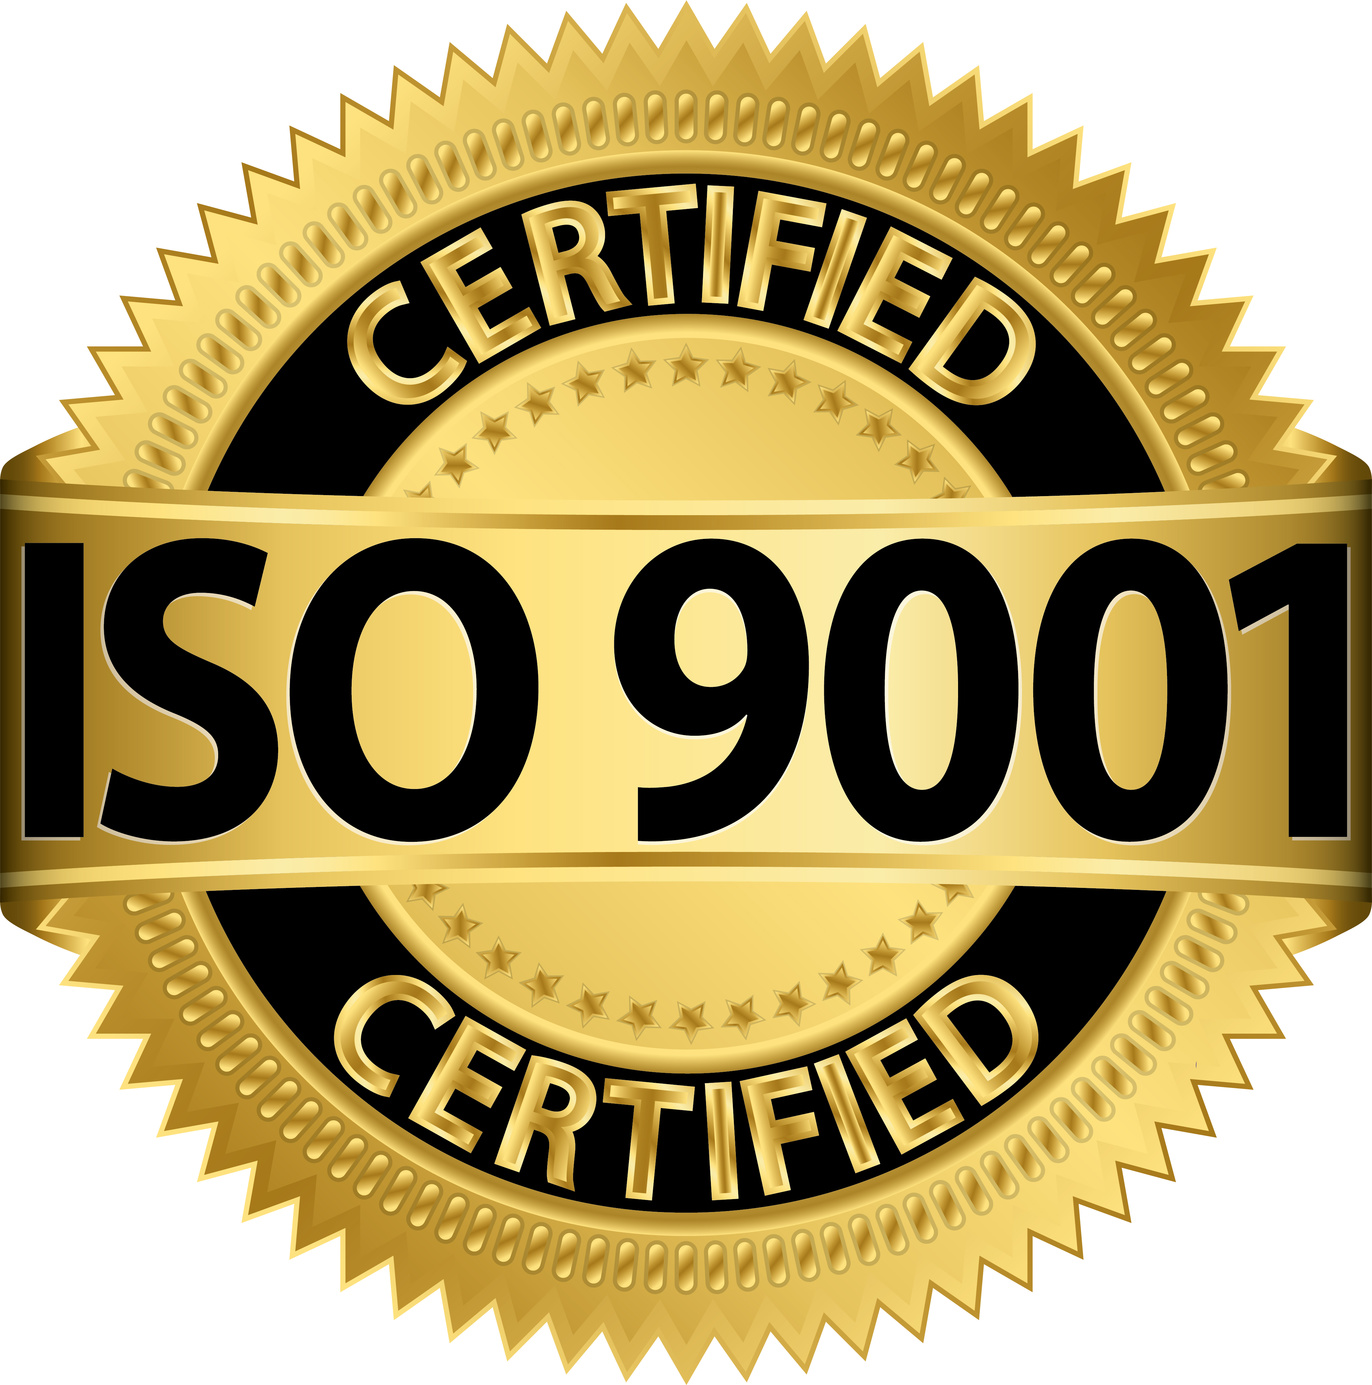 ISO 9001 certified golden label, vector illustration